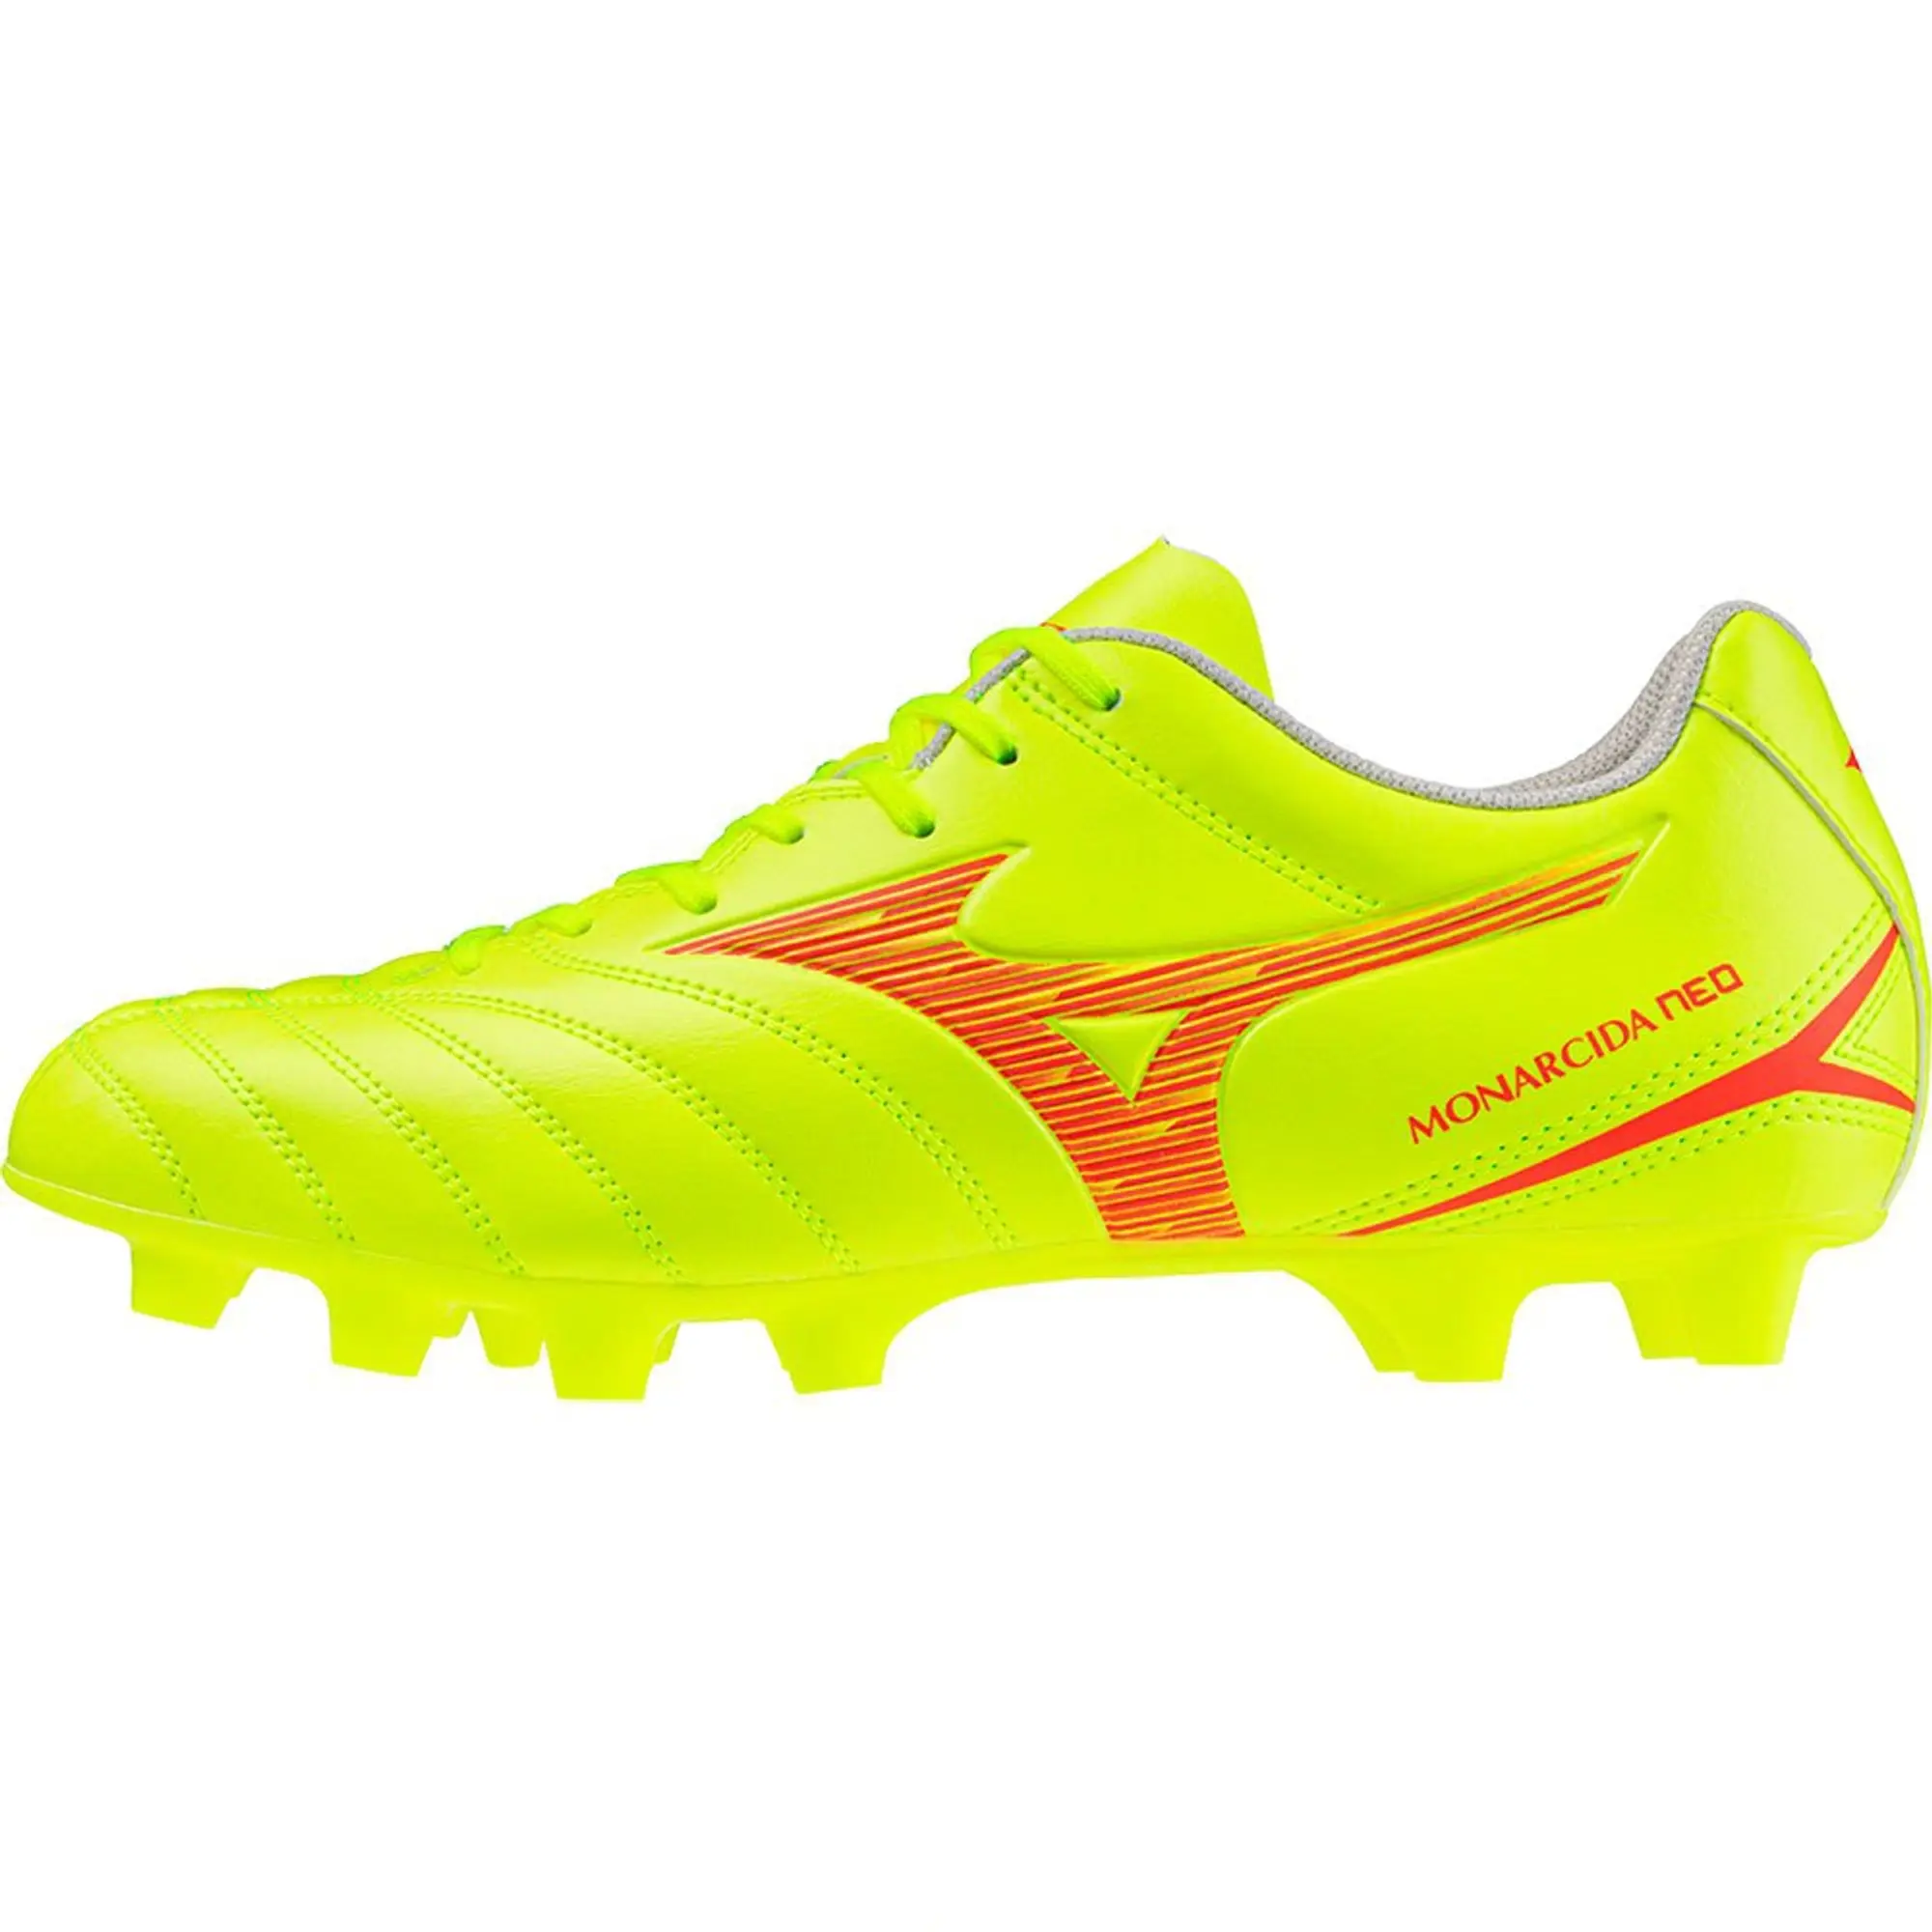 Mizuno Monarcida Neo Iii Select Md Football Boots  - Yellow